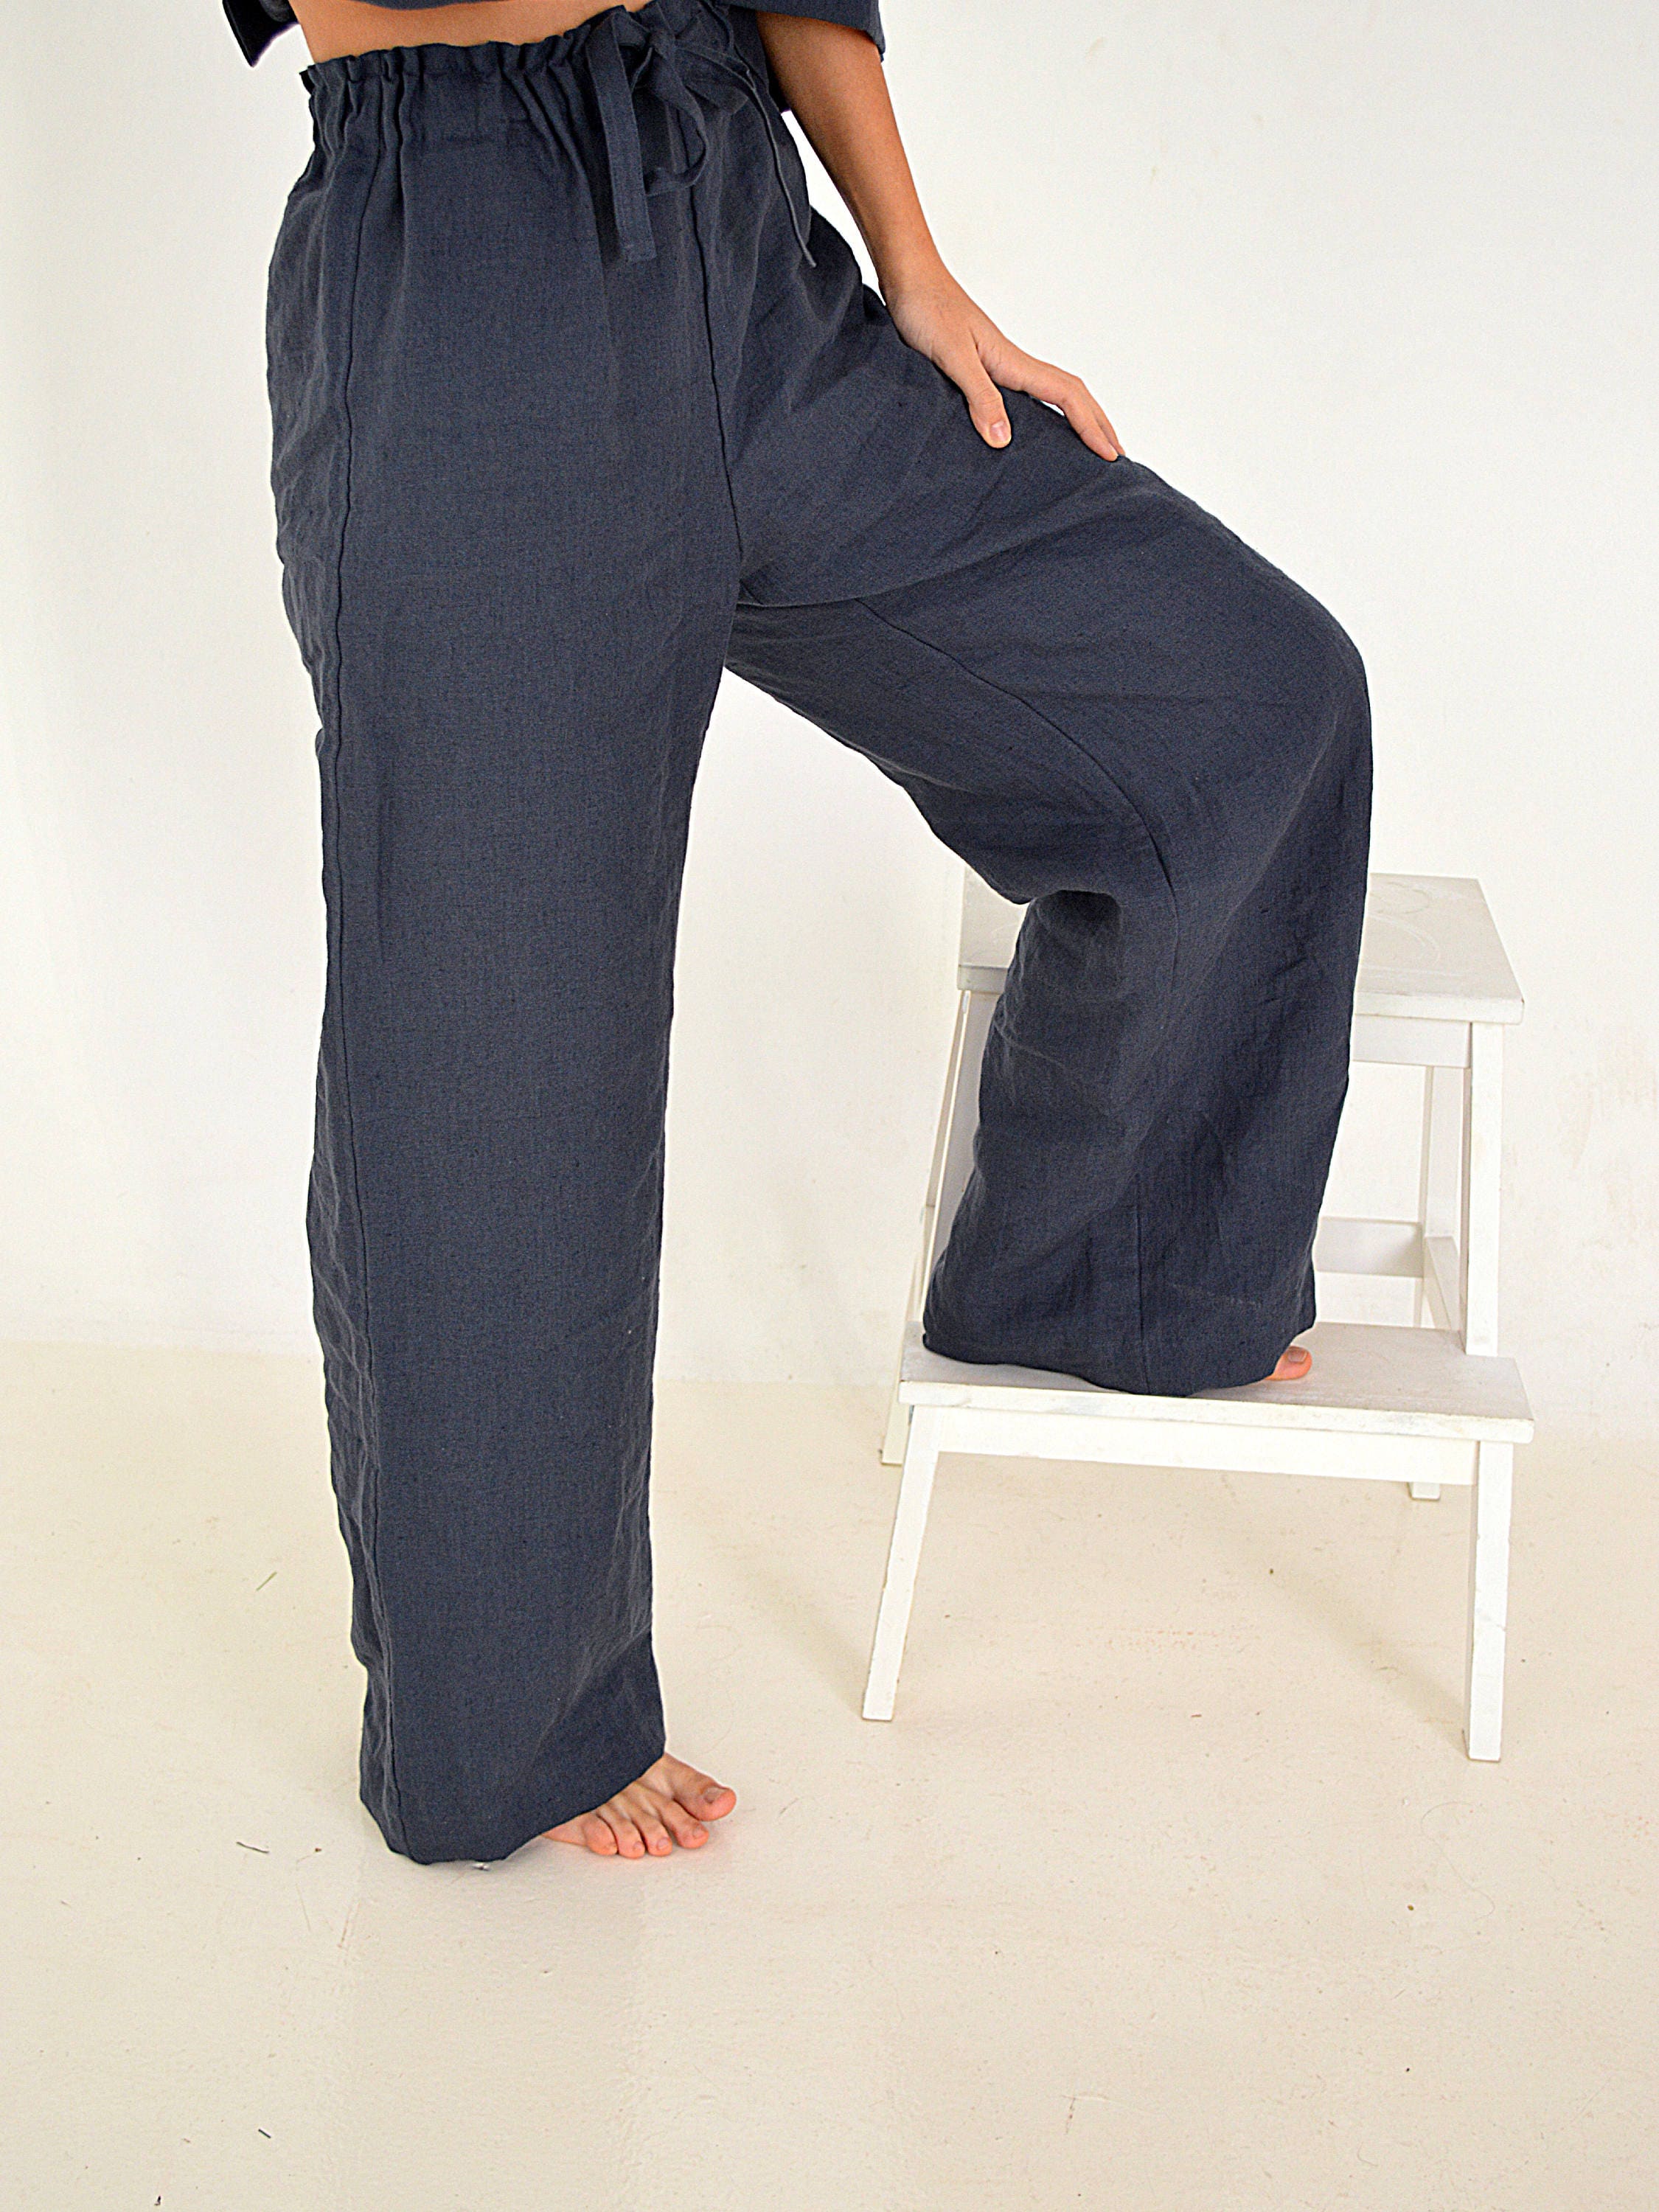 Linen Loose Pants / Woman's Linen Pants / Linen Trousers / Sizes XS-2XL / Soft  Linen Trousers / Linen Pajama Pants / White Linen Pants 